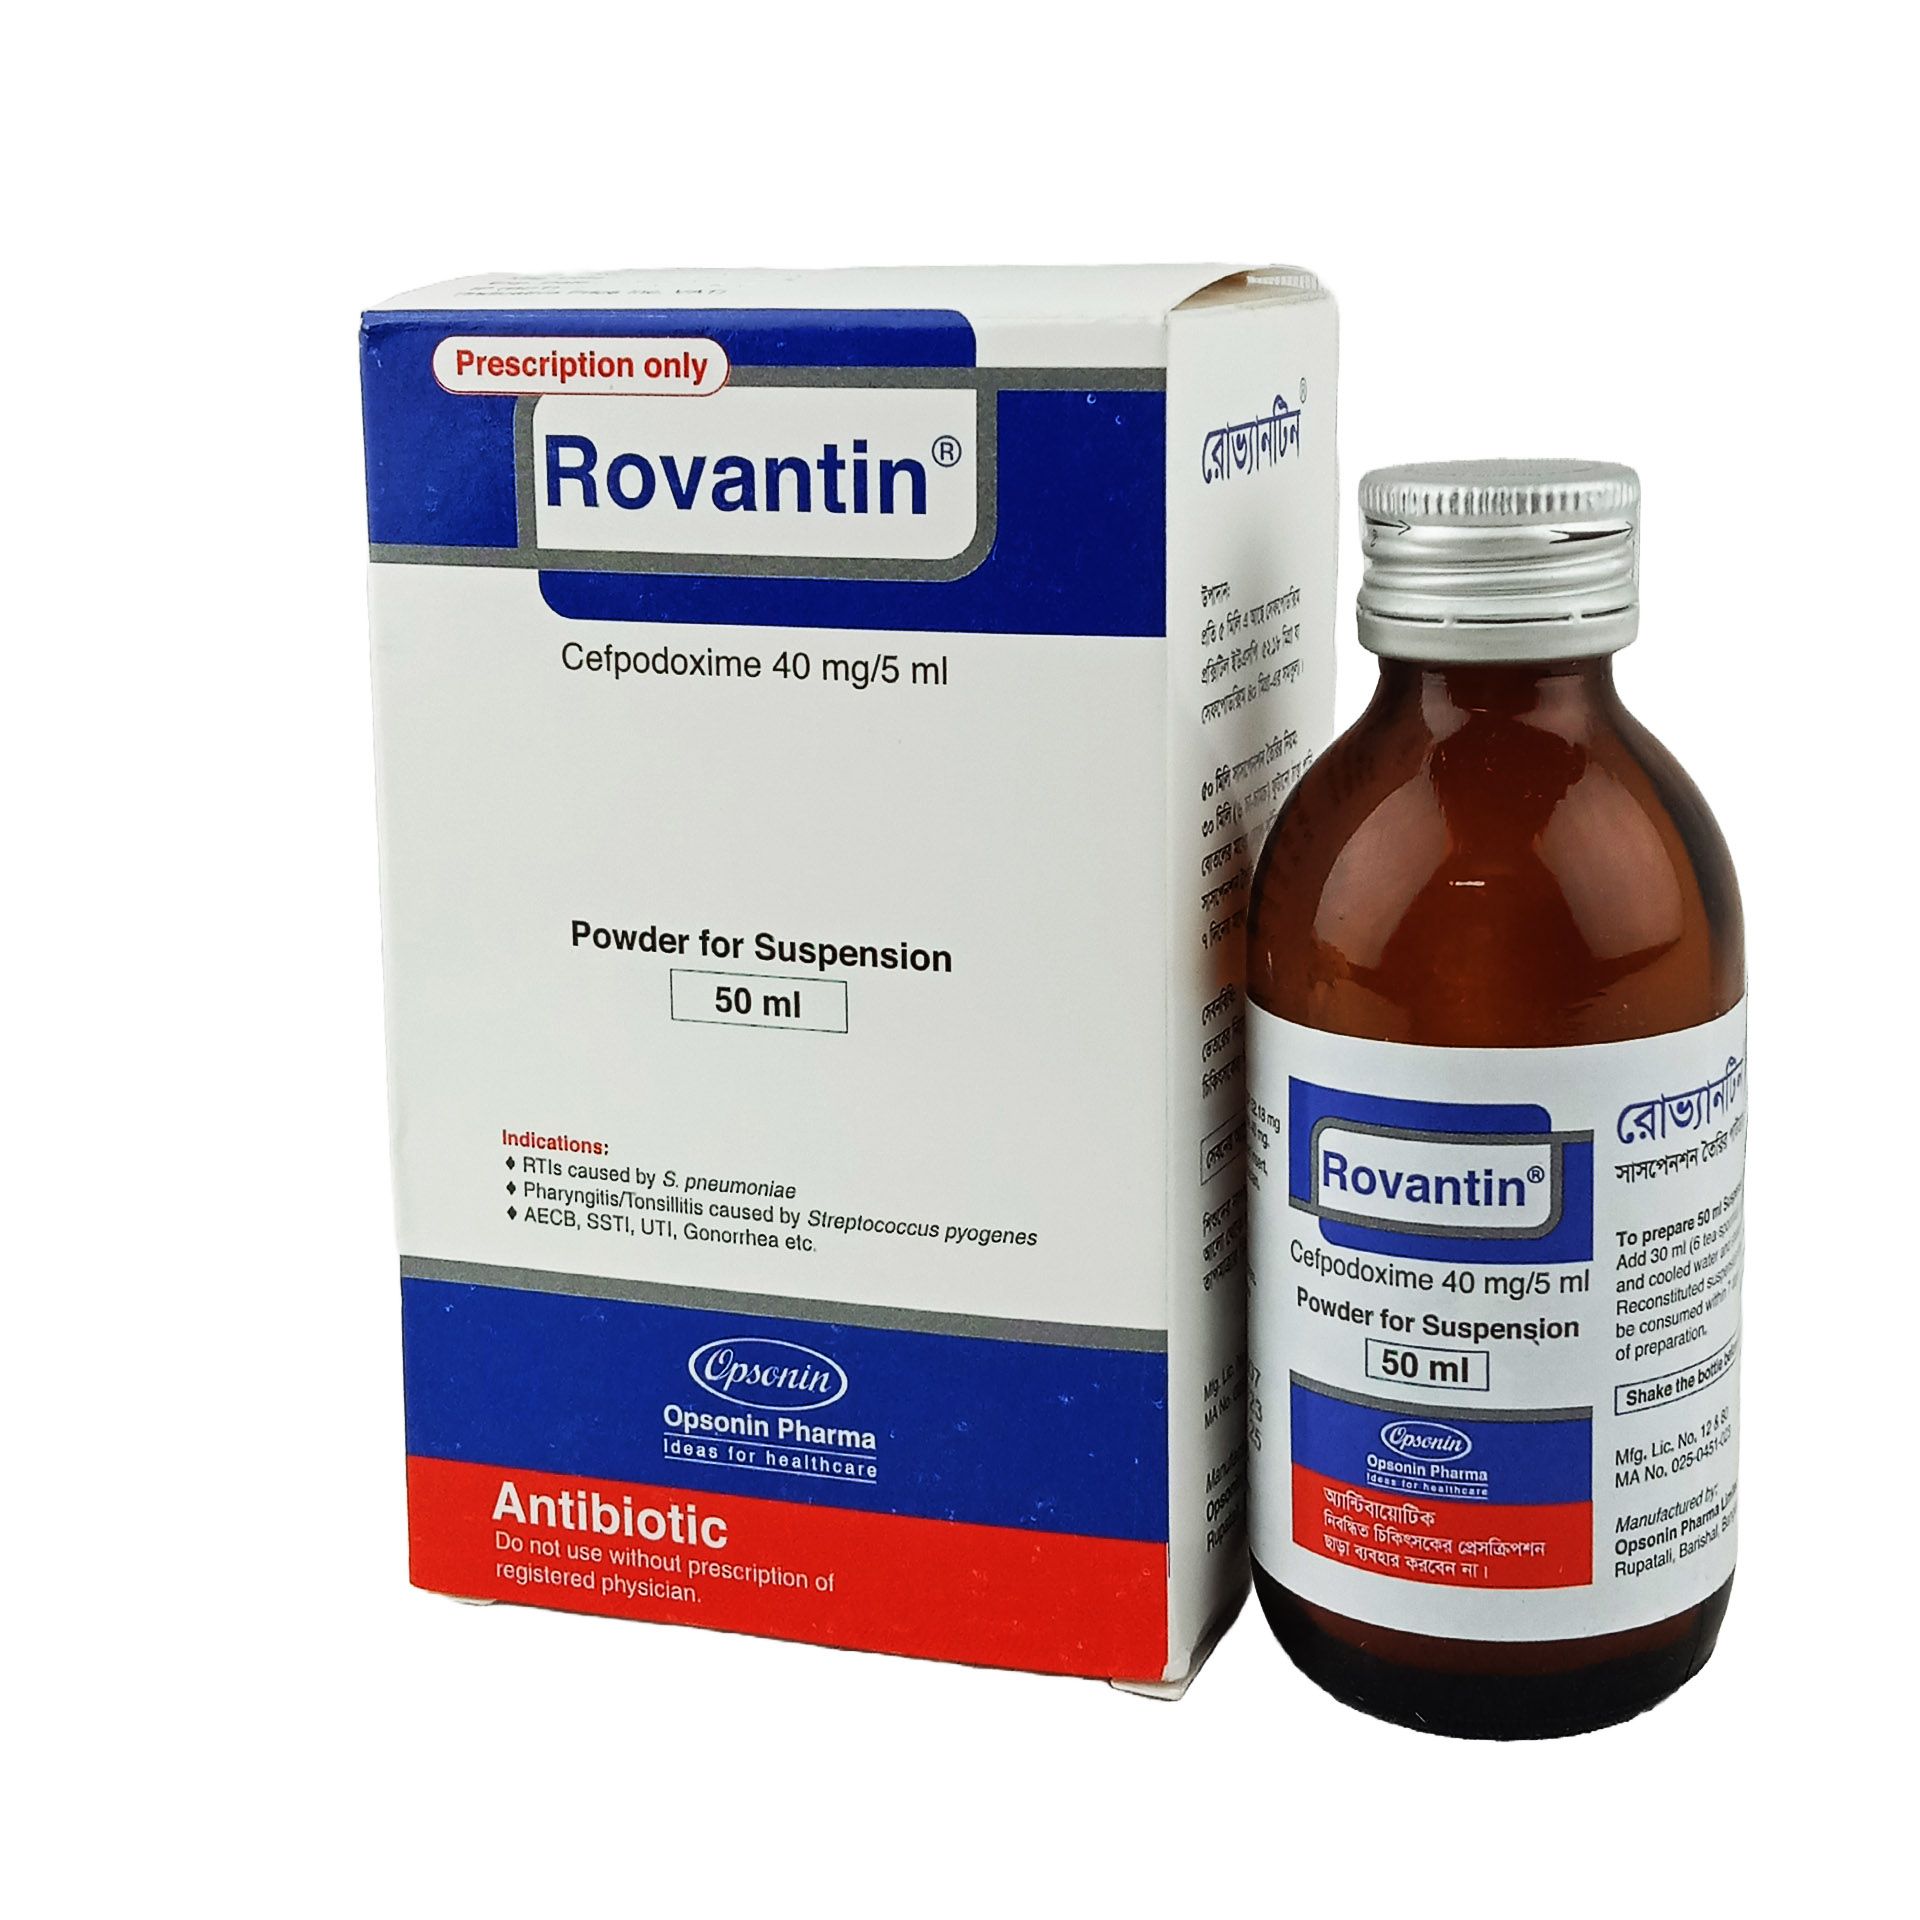 Rovantin 40mg/5ml Powder for Suspension